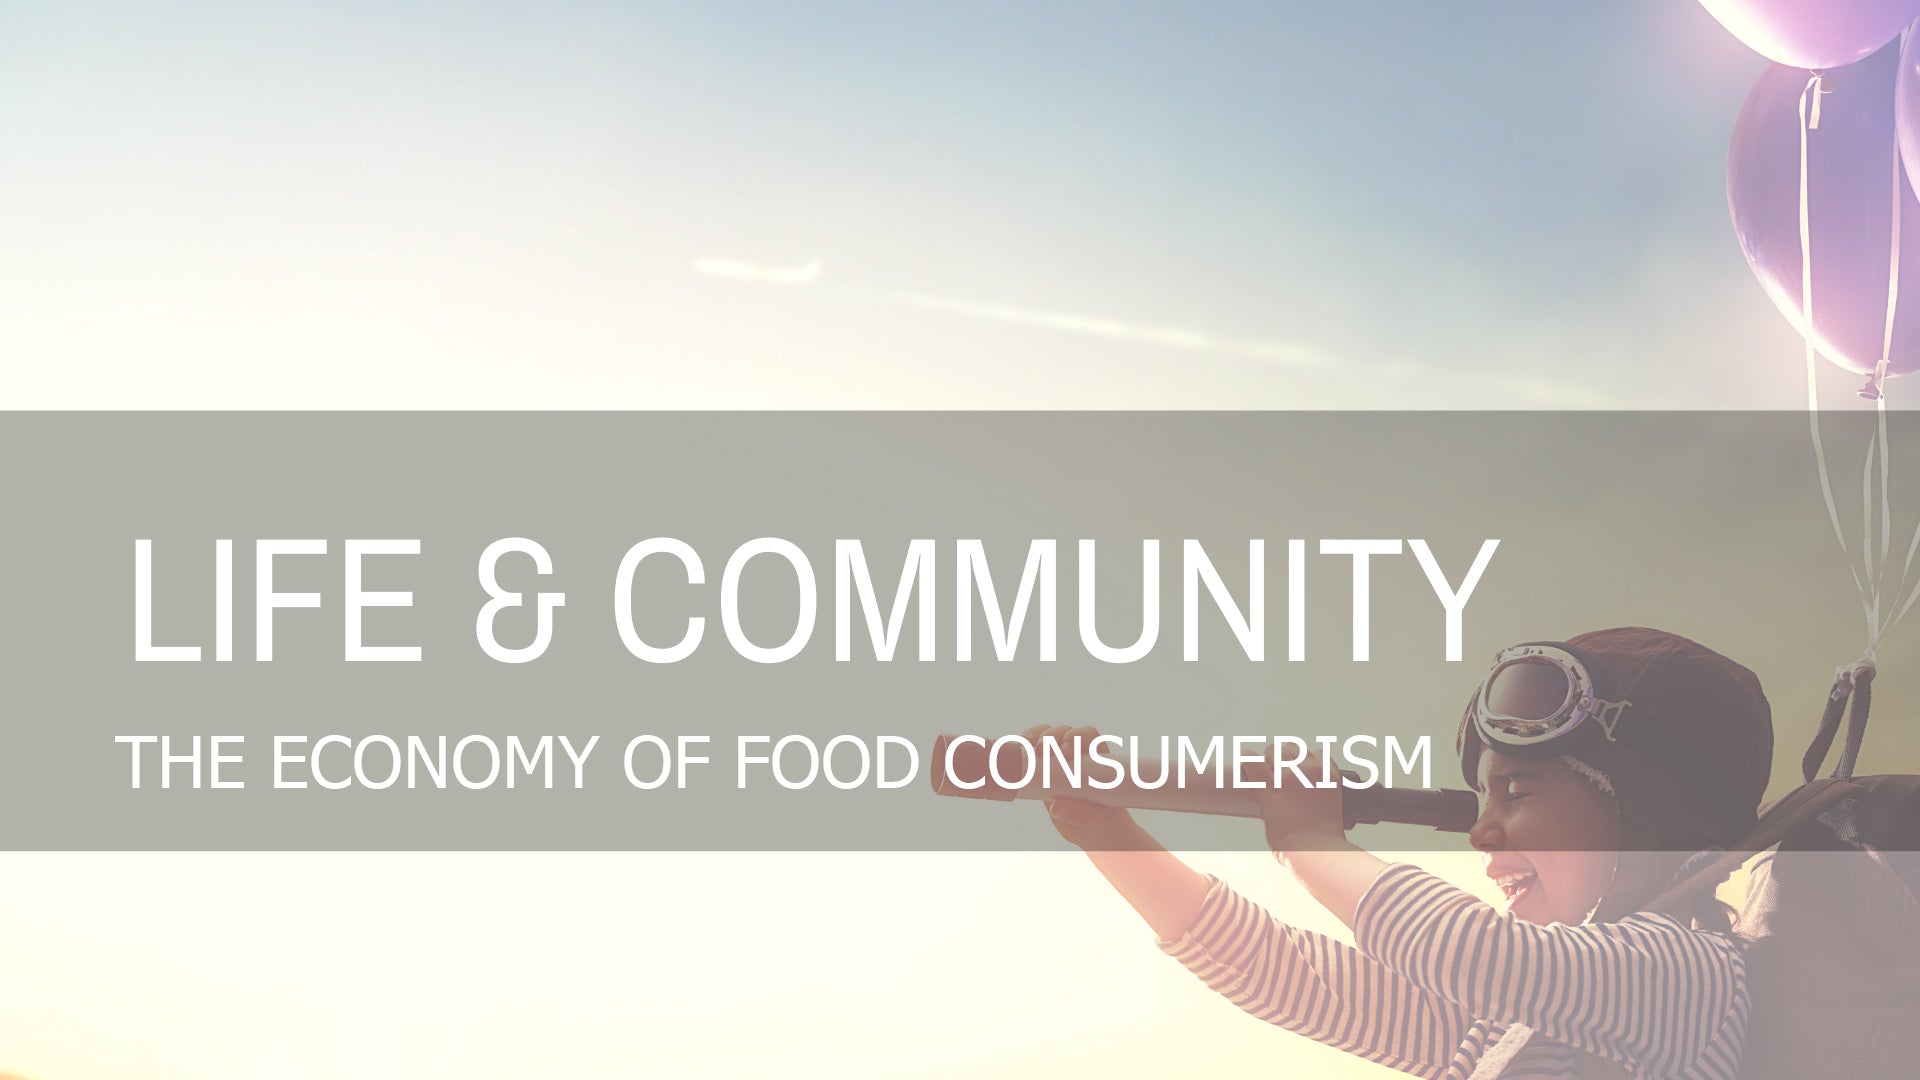 The Economy of Food Consumerism